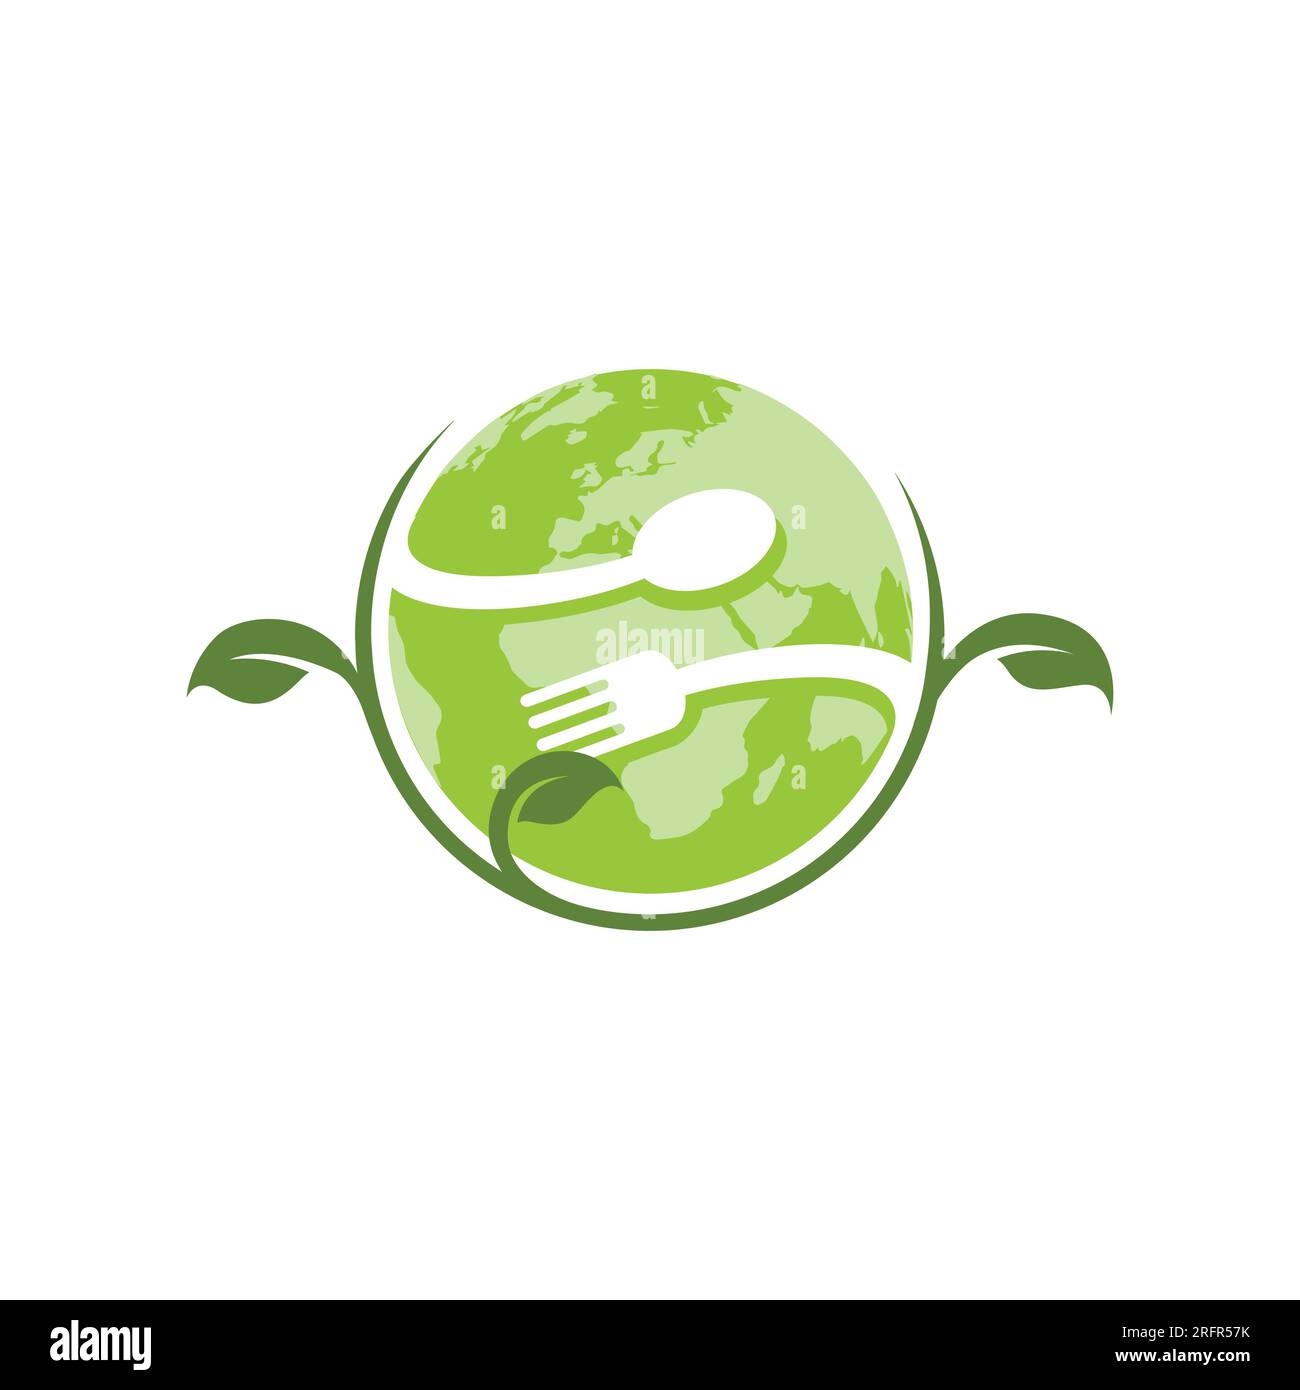 Vegetarian vegan world logo icon with globe vector image. Plant based vegan badge eco icon. Suitable vegetarian symbol logo leaf plant sign. Stock Vector